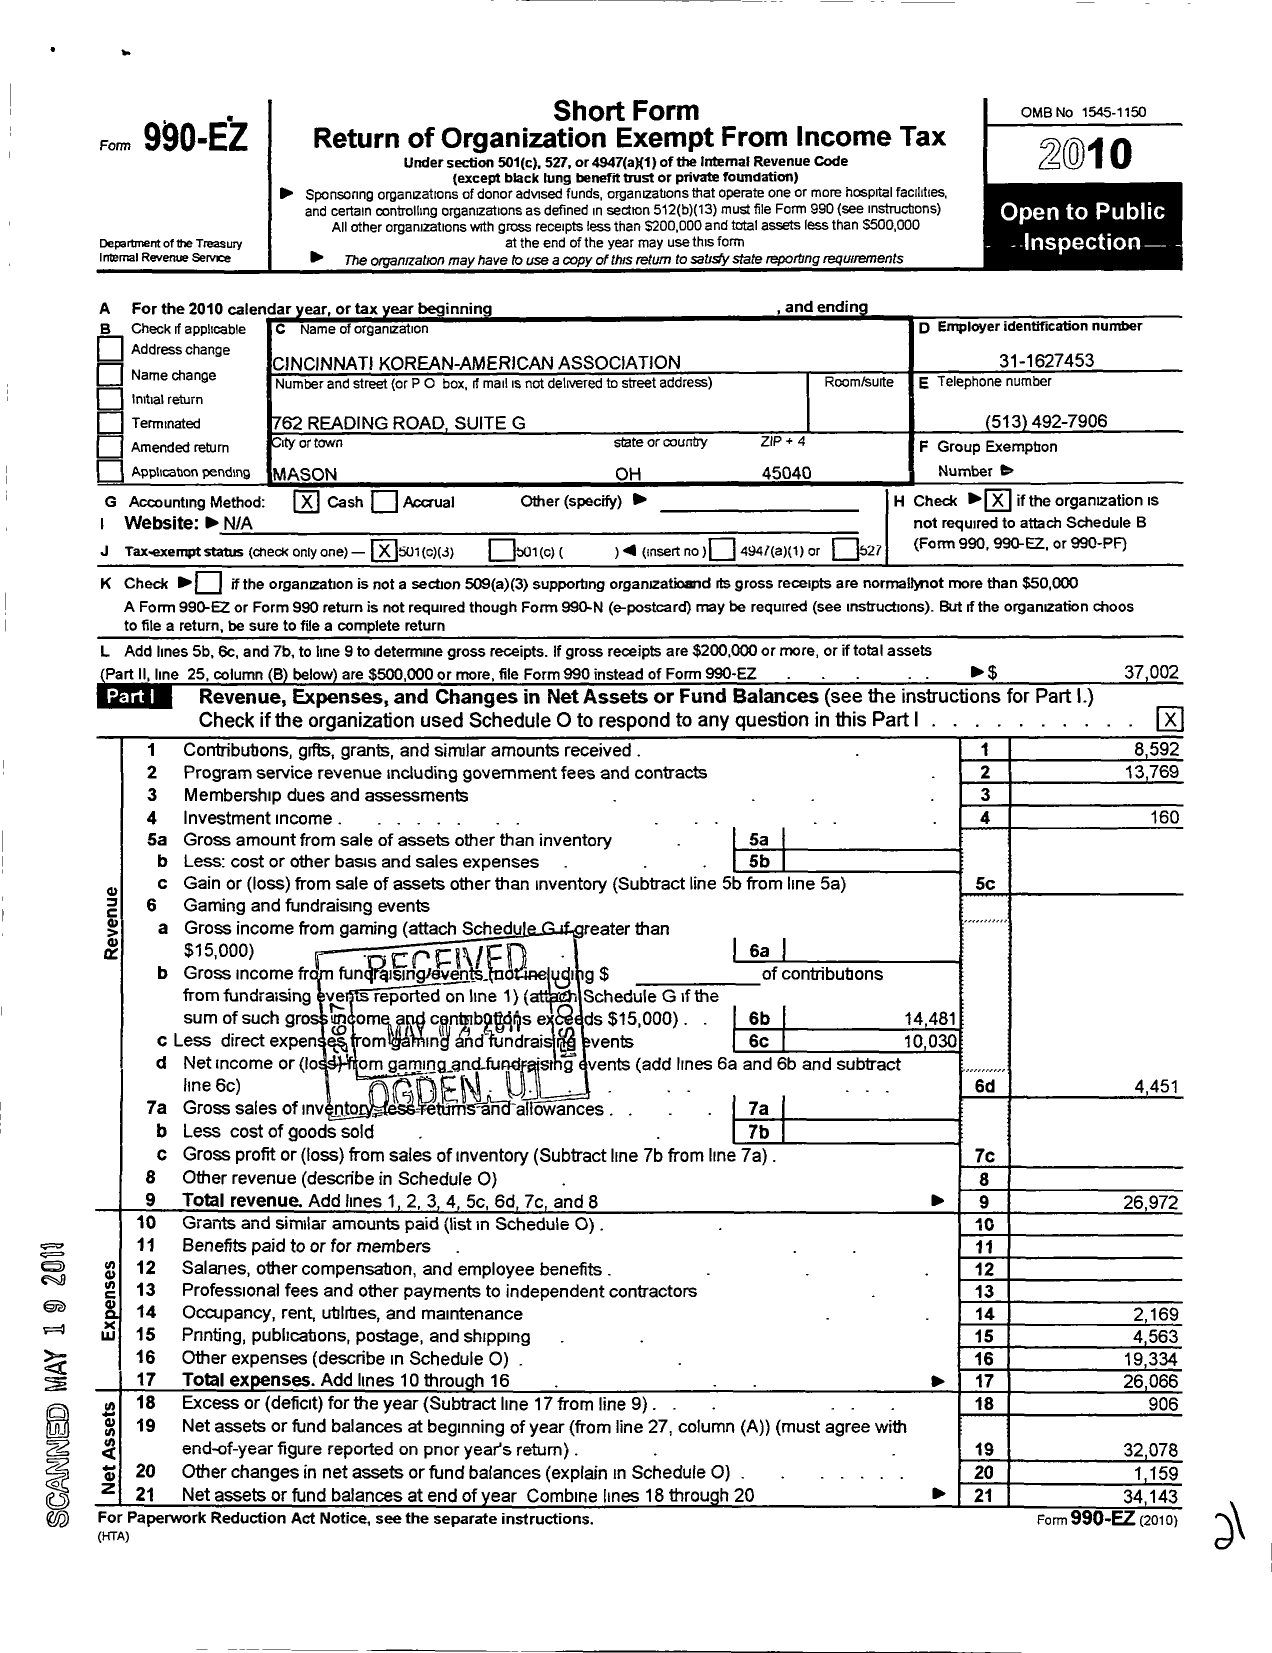 Image of first page of 2010 Form 990EZ for Cincinnati Korean American Association